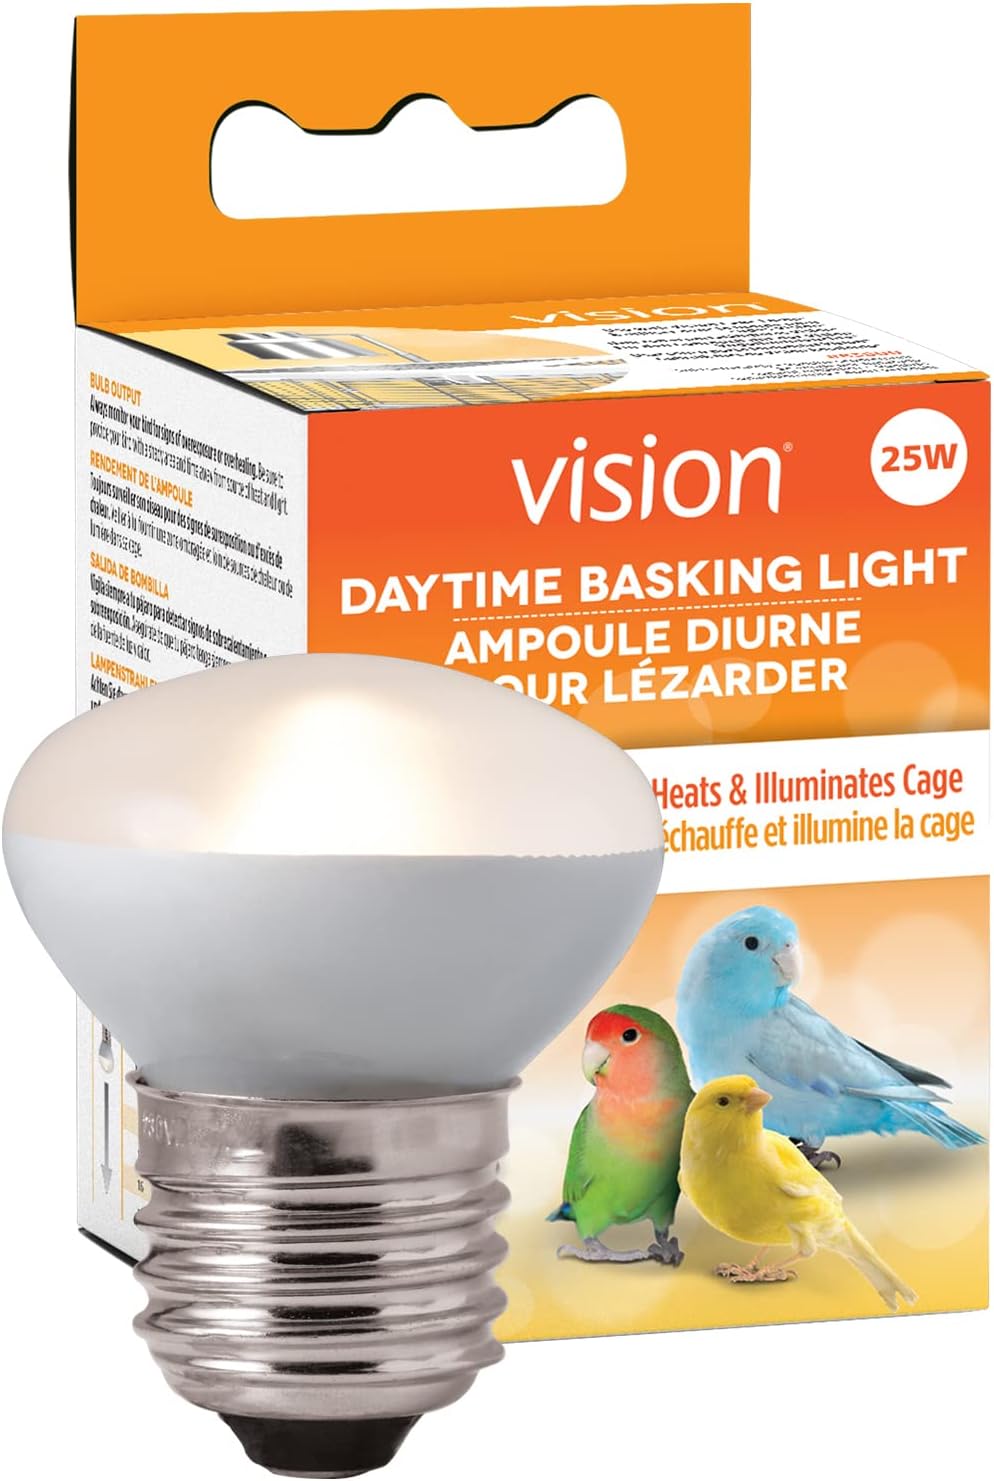 Vision Daytime Basking Light 25W